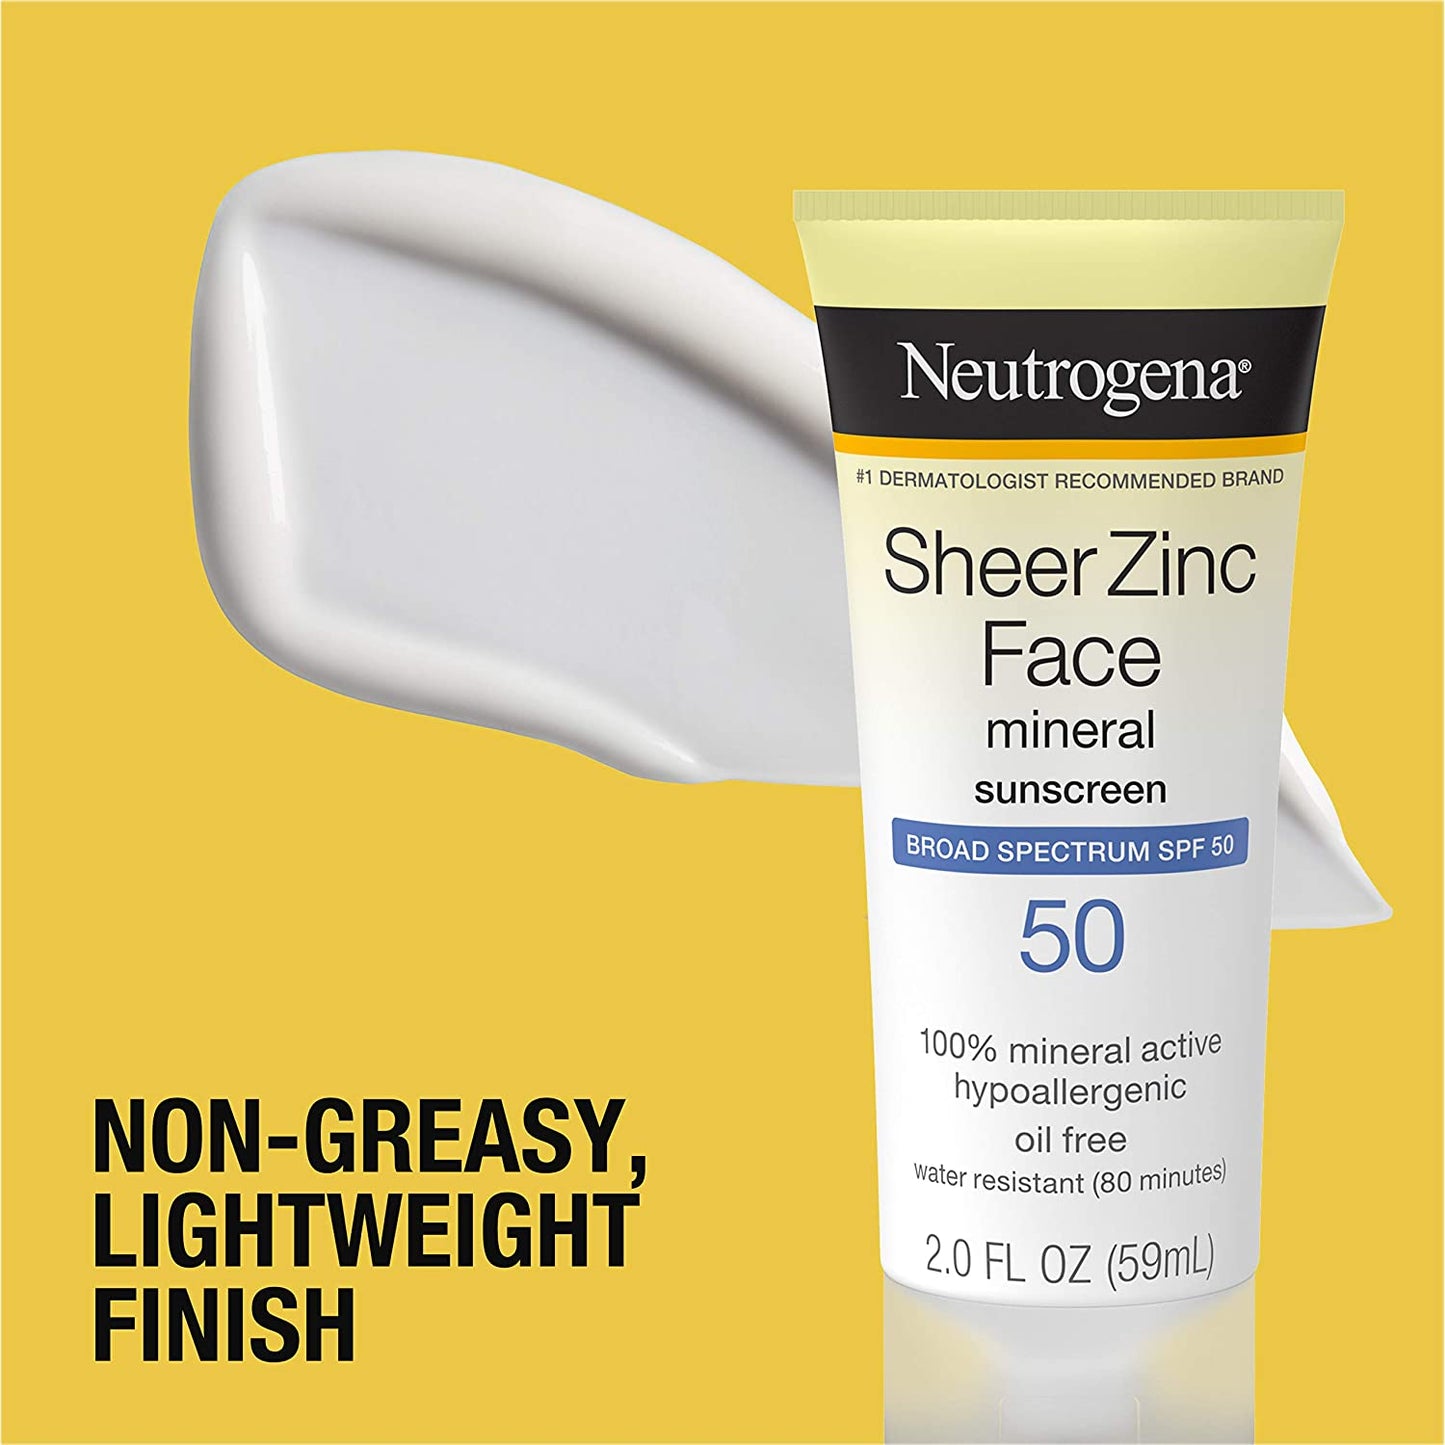 Neutrogena Sheer Zinc Face Mineral Sunscreen Lotion SPF 50, Oil-free & Water Resistant, 2.0 fl.oz / 59ml